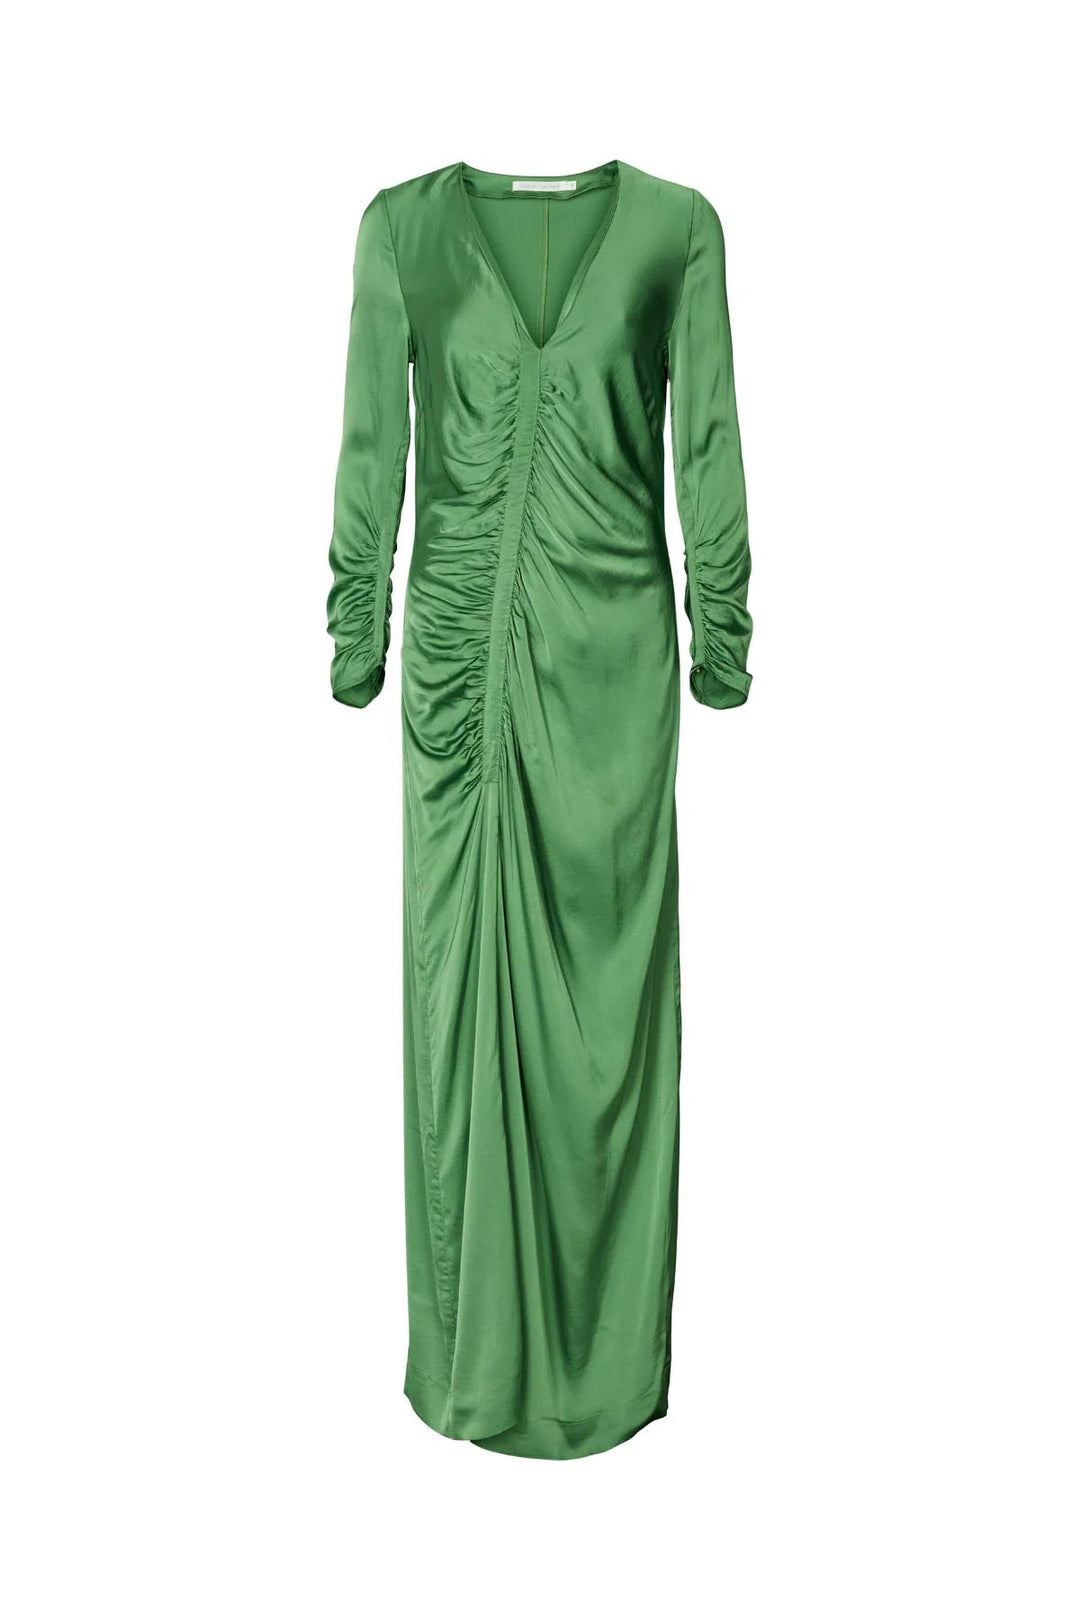 Rabens Saloner Maina Dress - Green - Shop 9